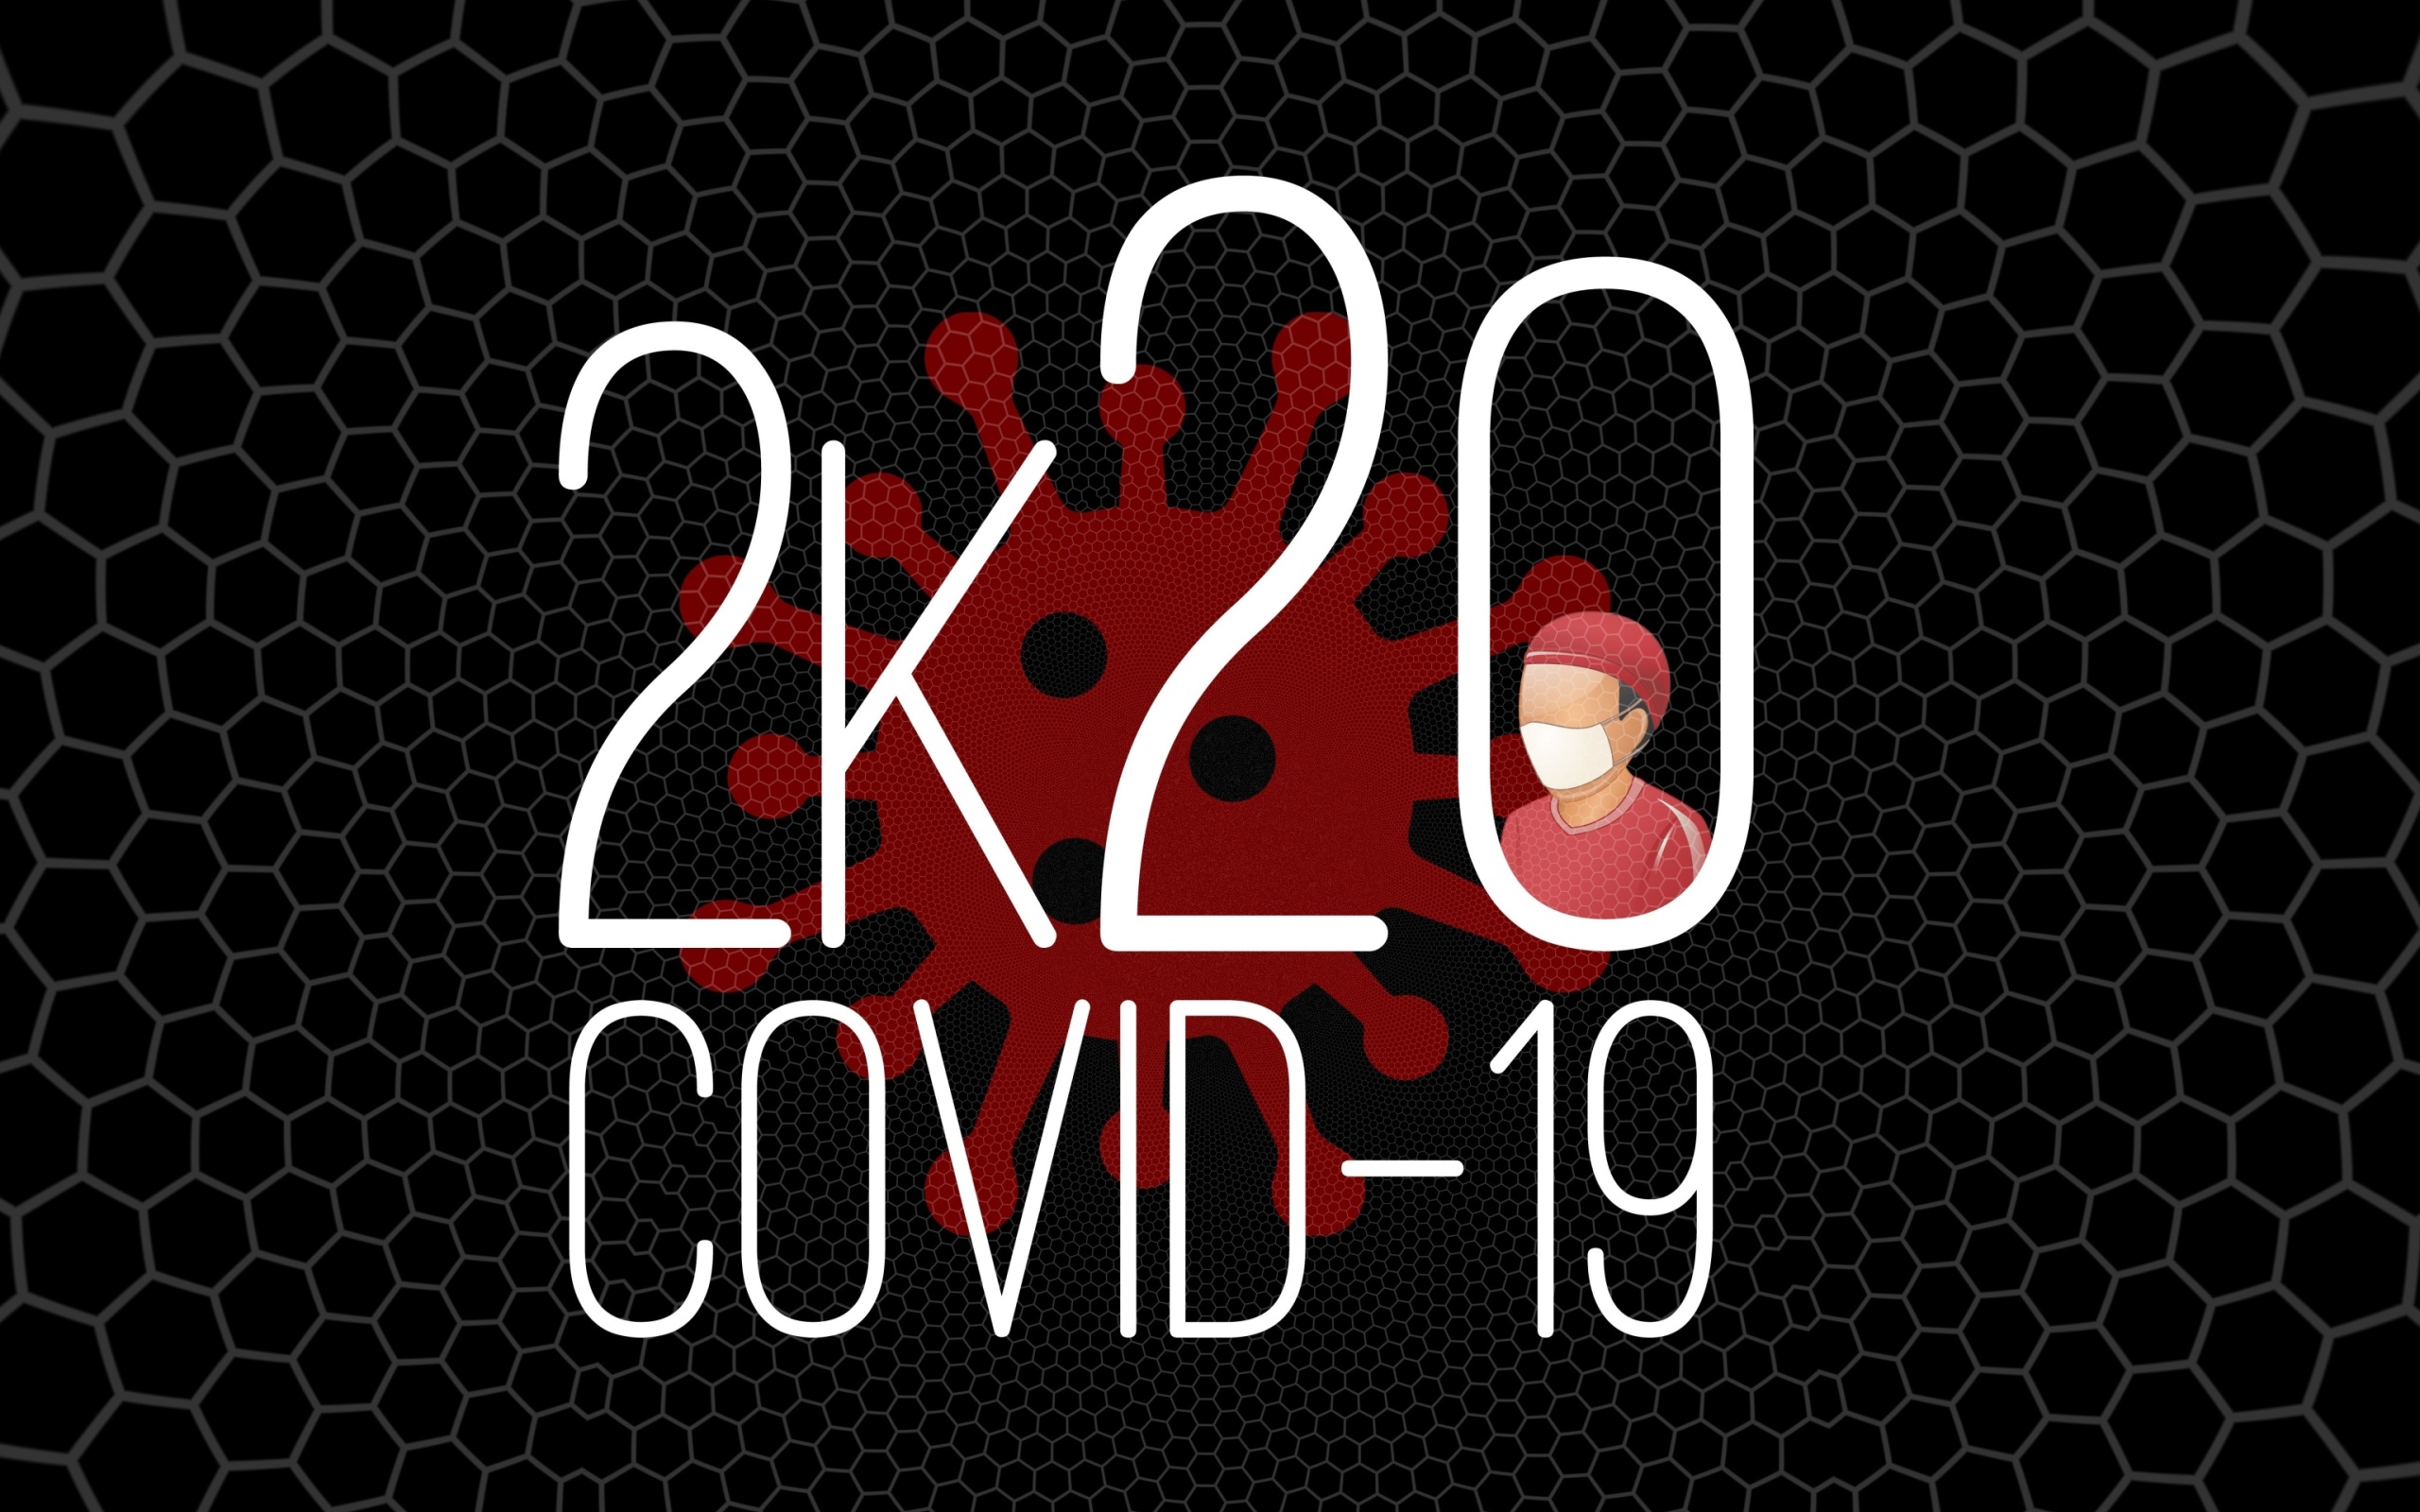 Coronavirus COVID 19 Pandemic 2020 wallpaper 2560x1600